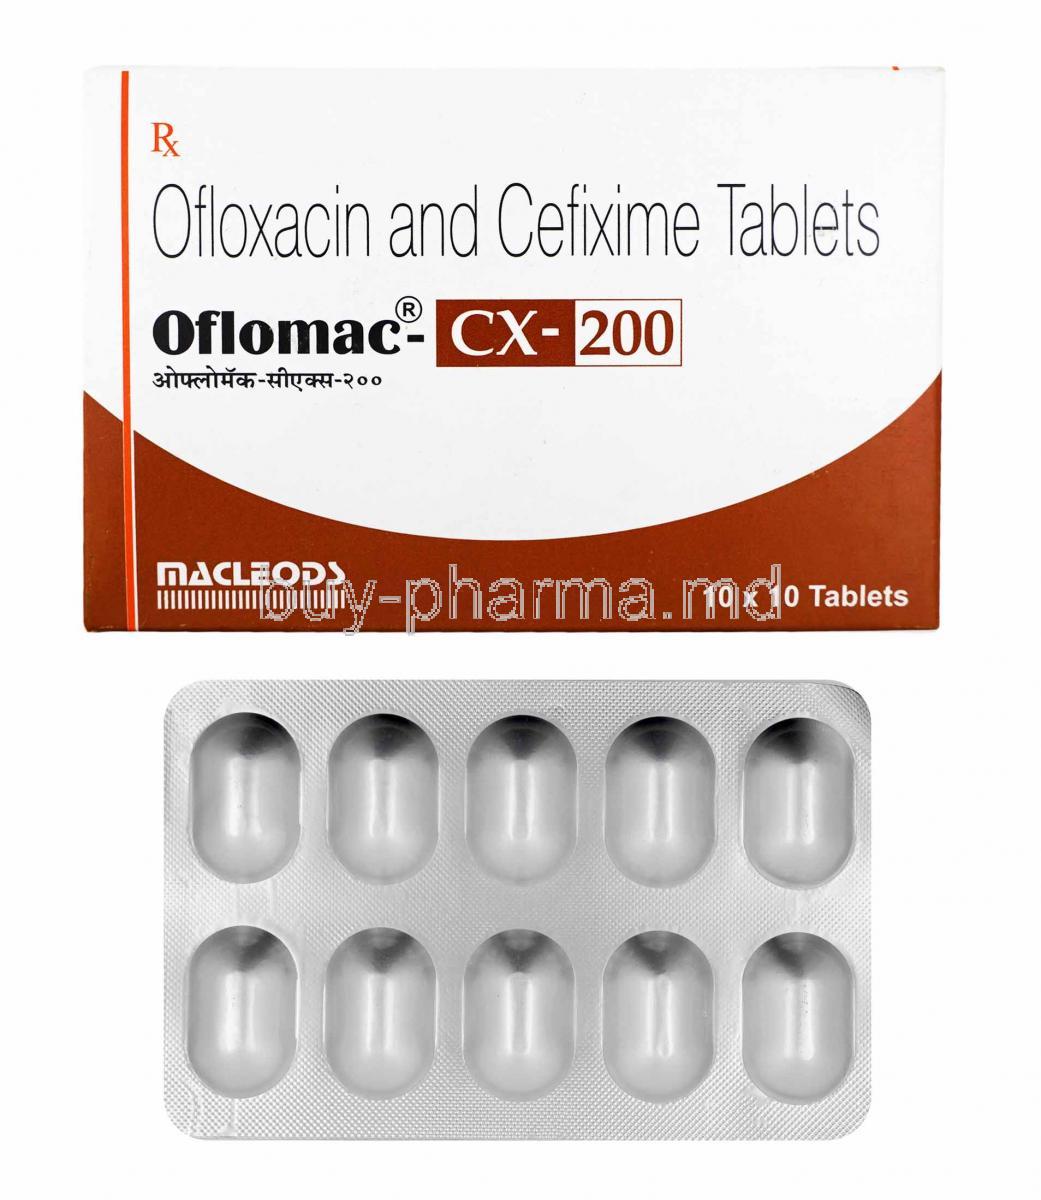 Oflomac CX, Cefixime and Ofloxacin box and tablet